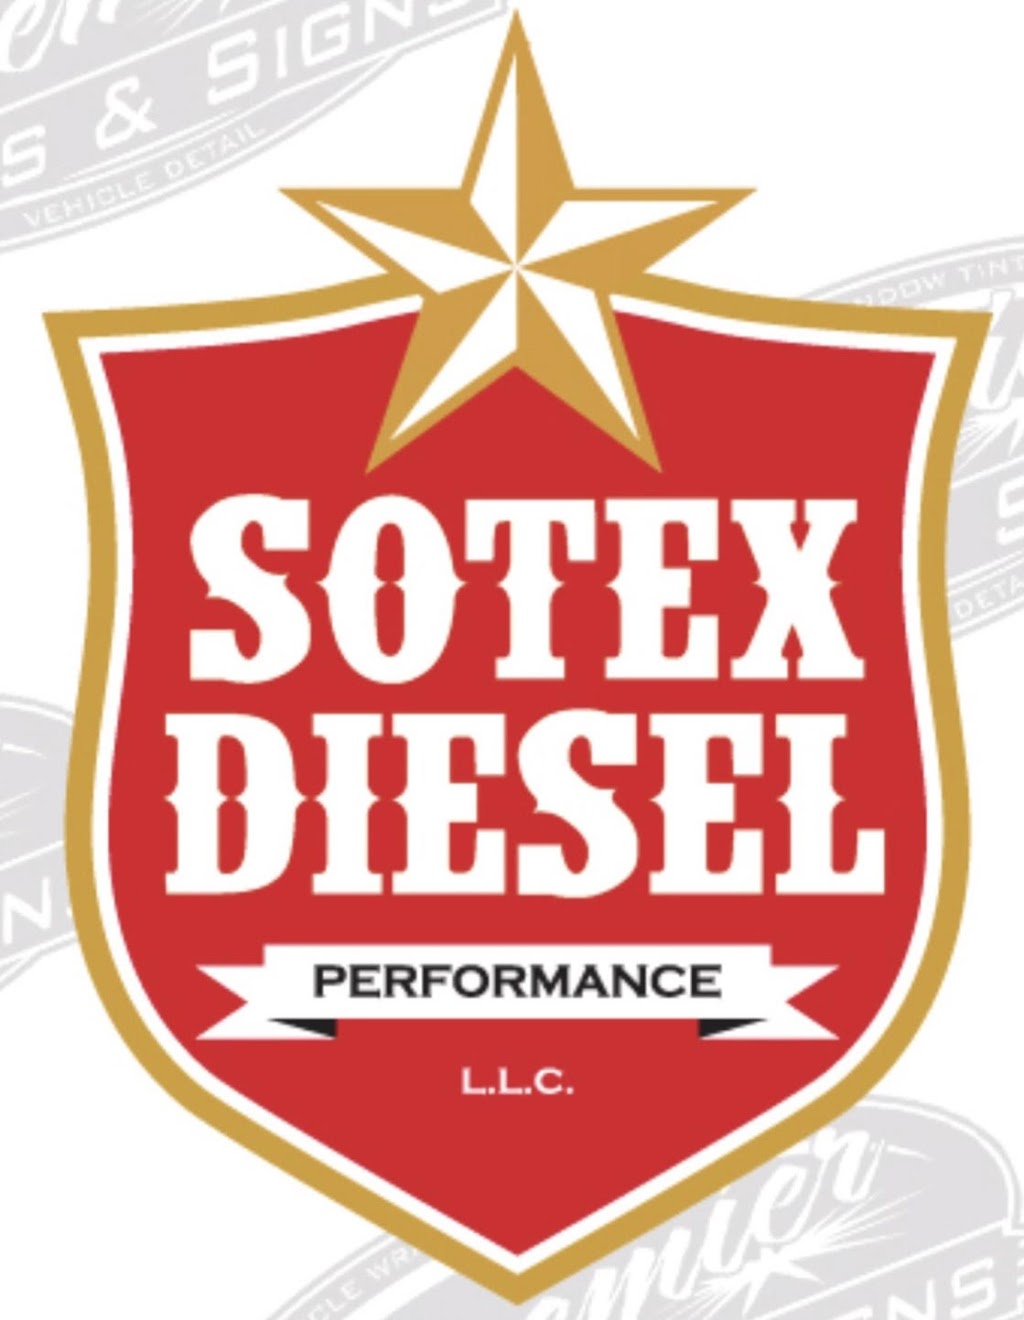 sotex diesel llc | 7042 Doberman St, Corpus Christi, TX 78414 | Phone: (512) 787-9949